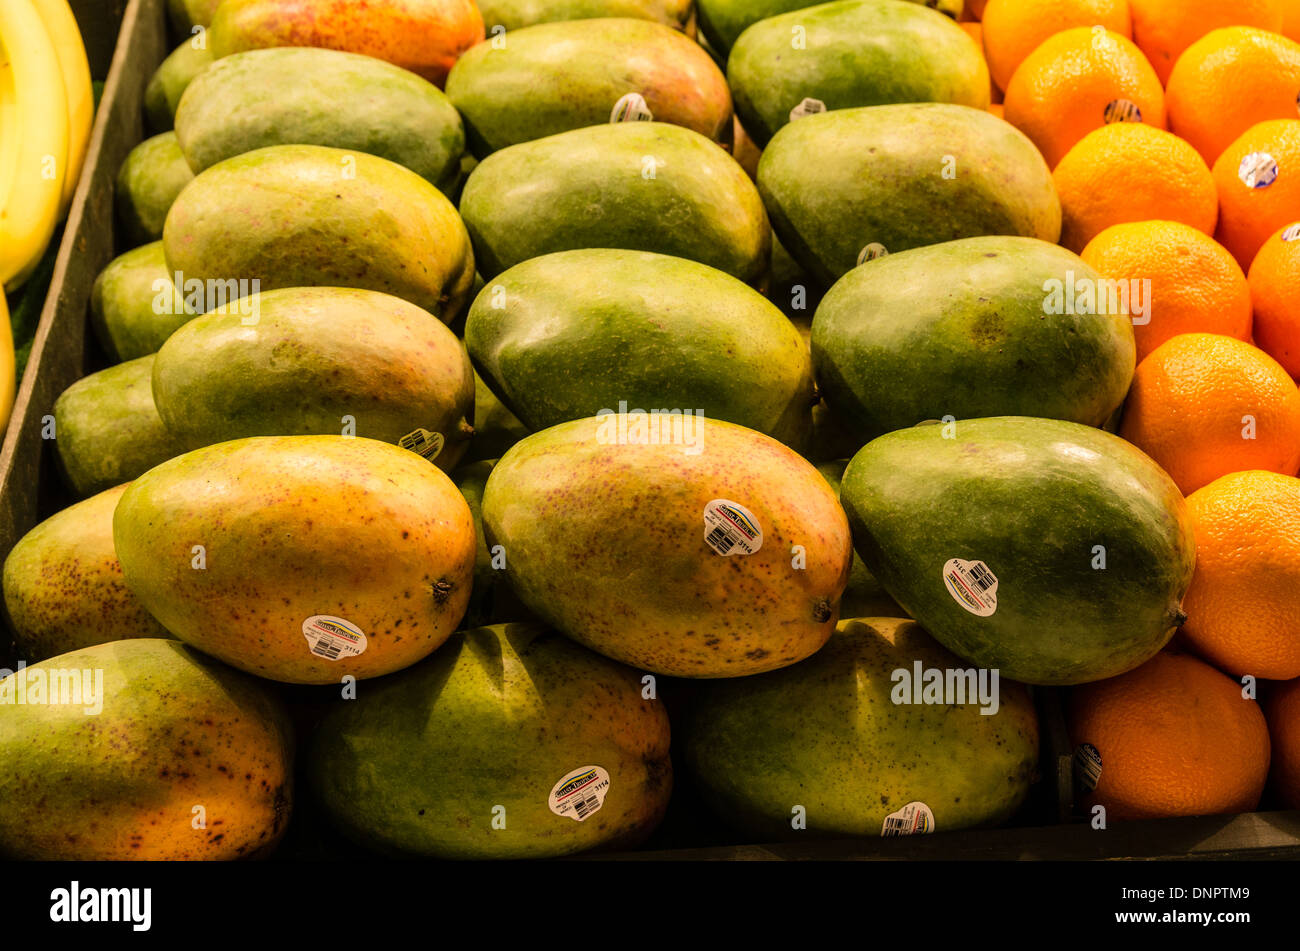 Fresh papaya fruit on display in a produce vendor's stall Pike Place Market Seattle, Washington, USA Stock Photo